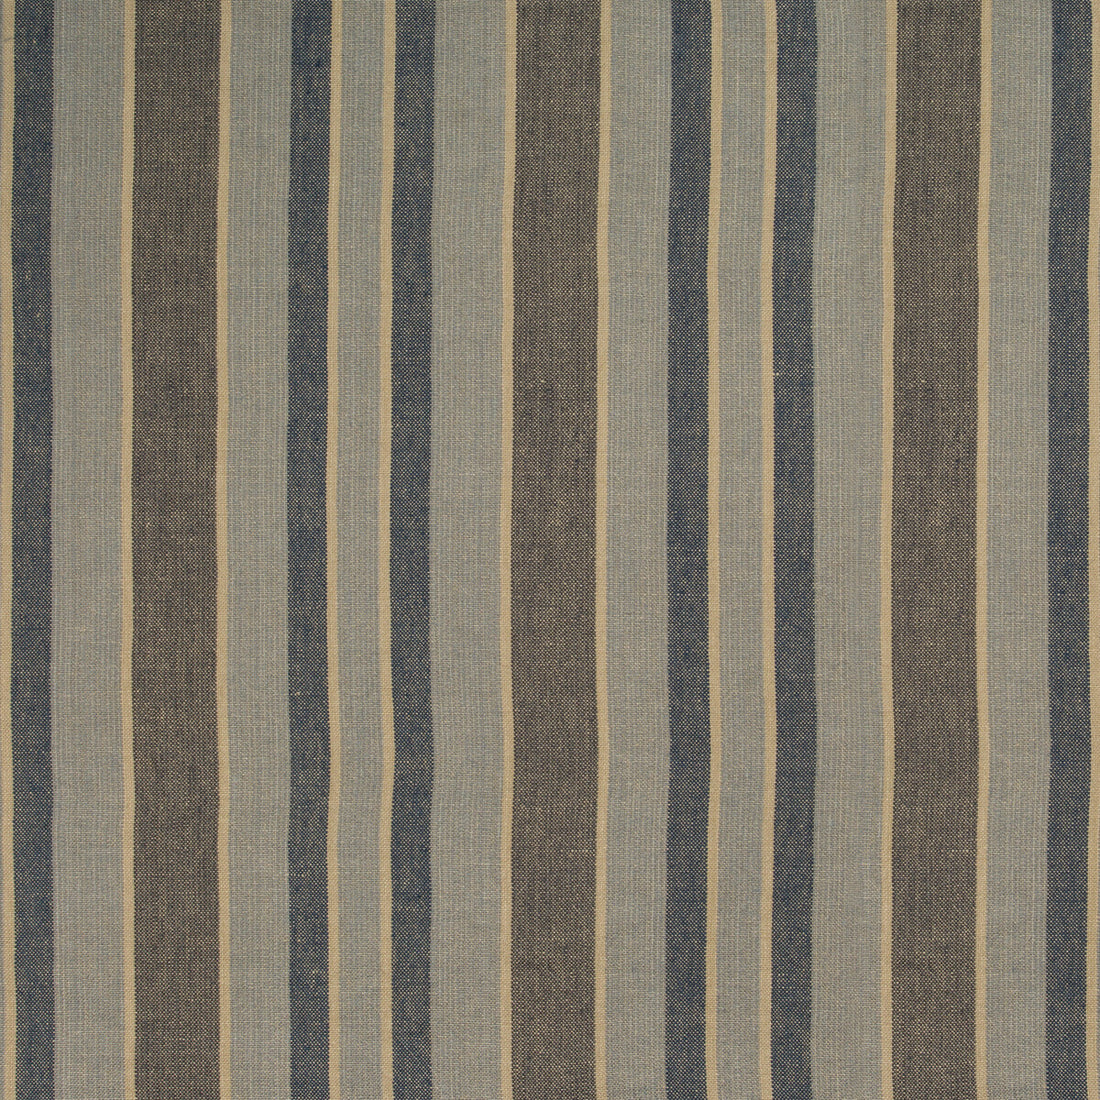 Bondi Stripe fabric in denim color - pattern 35399.516.0 - by Kravet Design in the Nate Berkus Well-Traveled collection